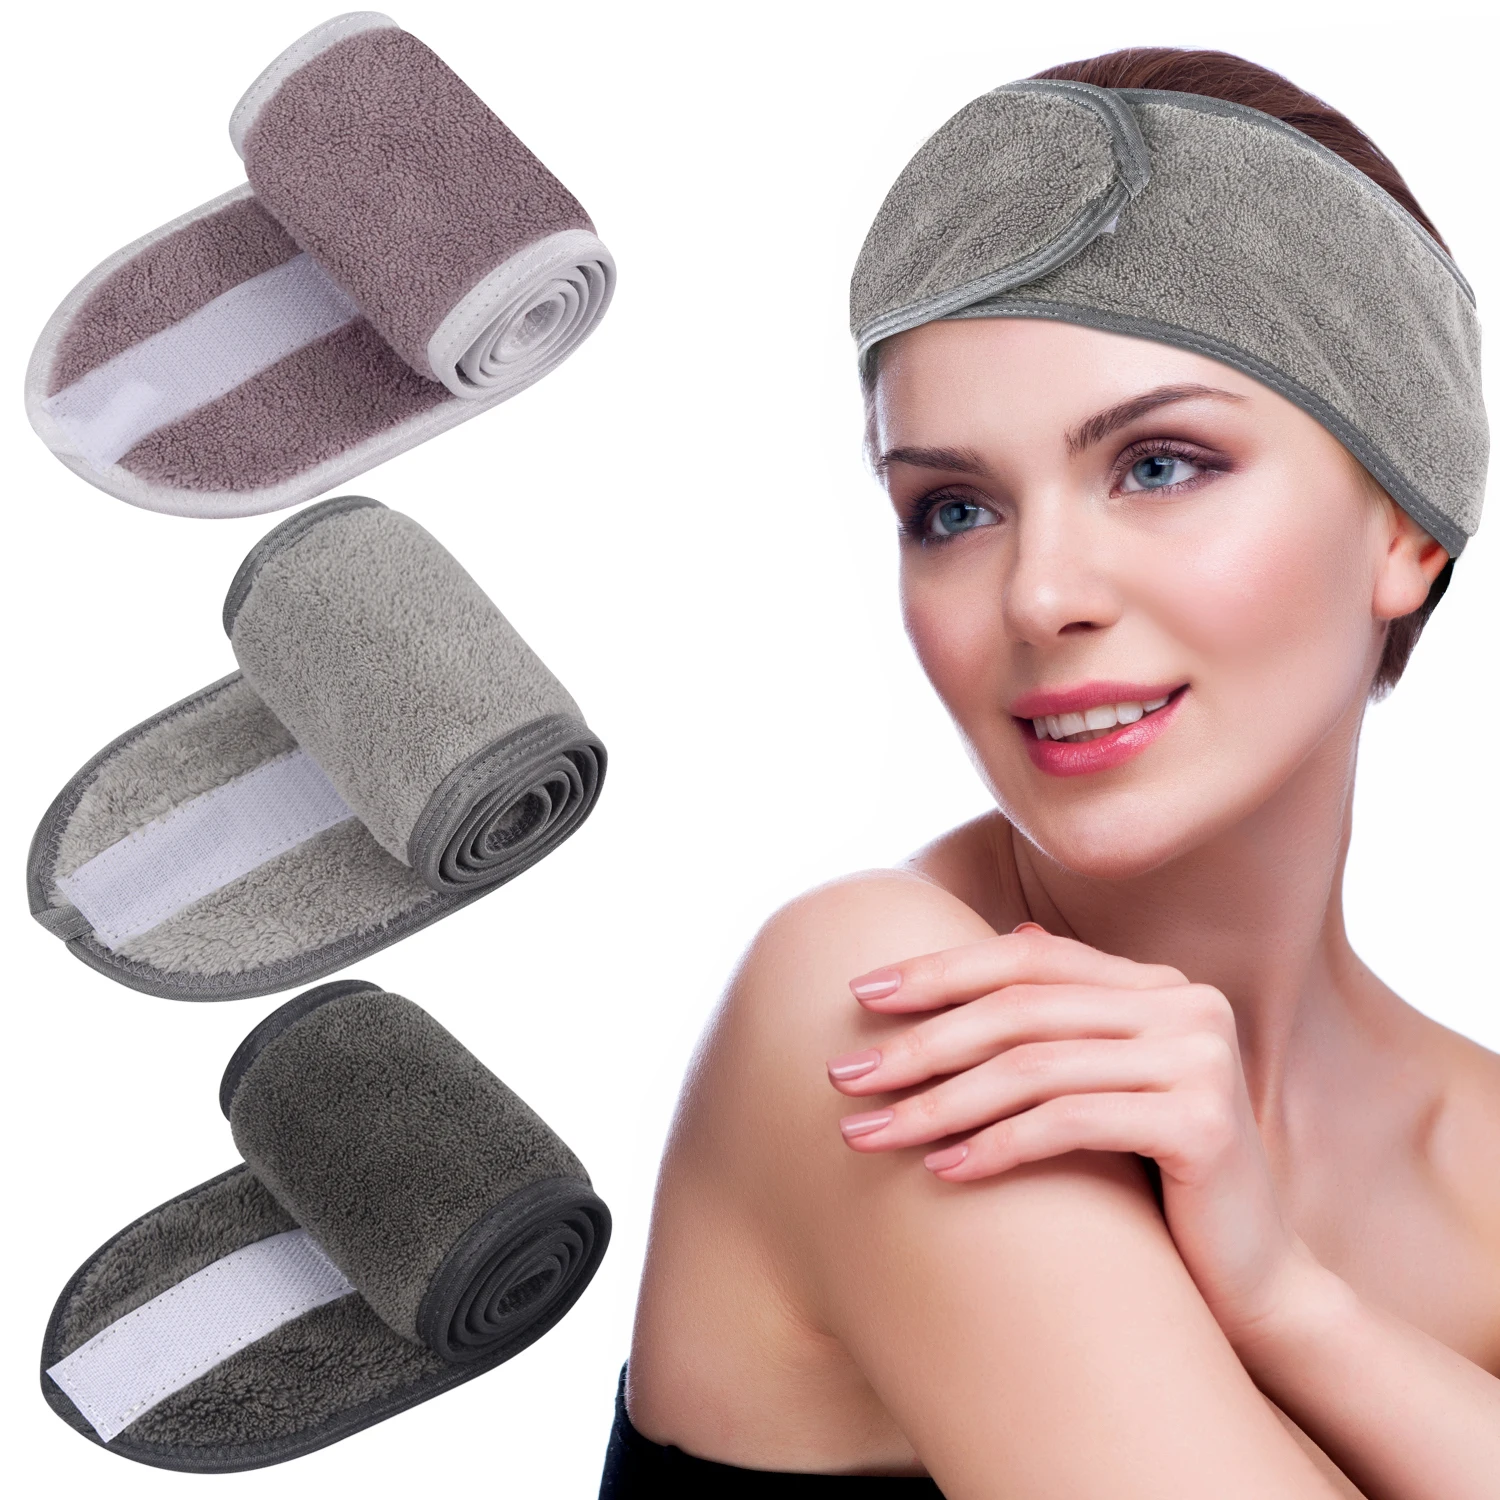 

High Quality custom Microfiber cute beauty makeup hair band facial headband spa wholesale hairband For Women, Purple, gray, beige,dark grey